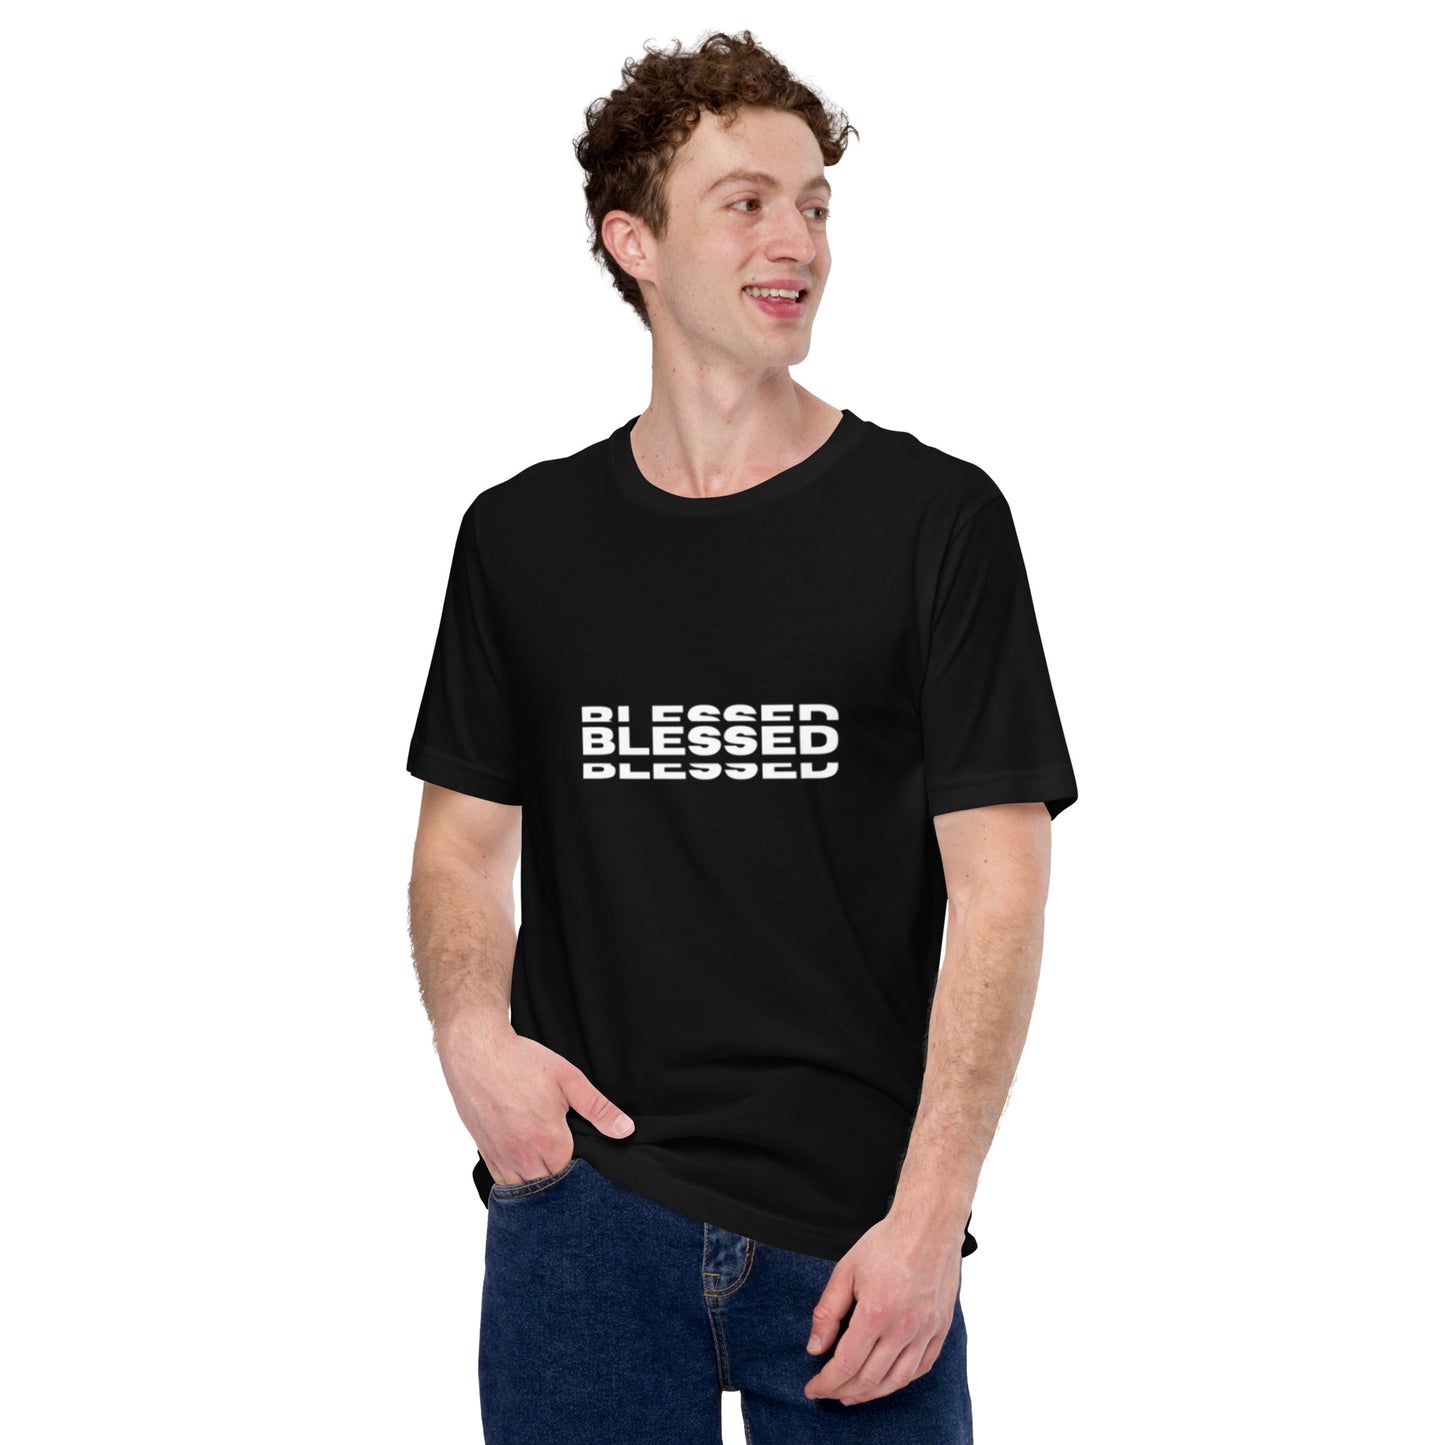 Blessed Unisex t-shirt